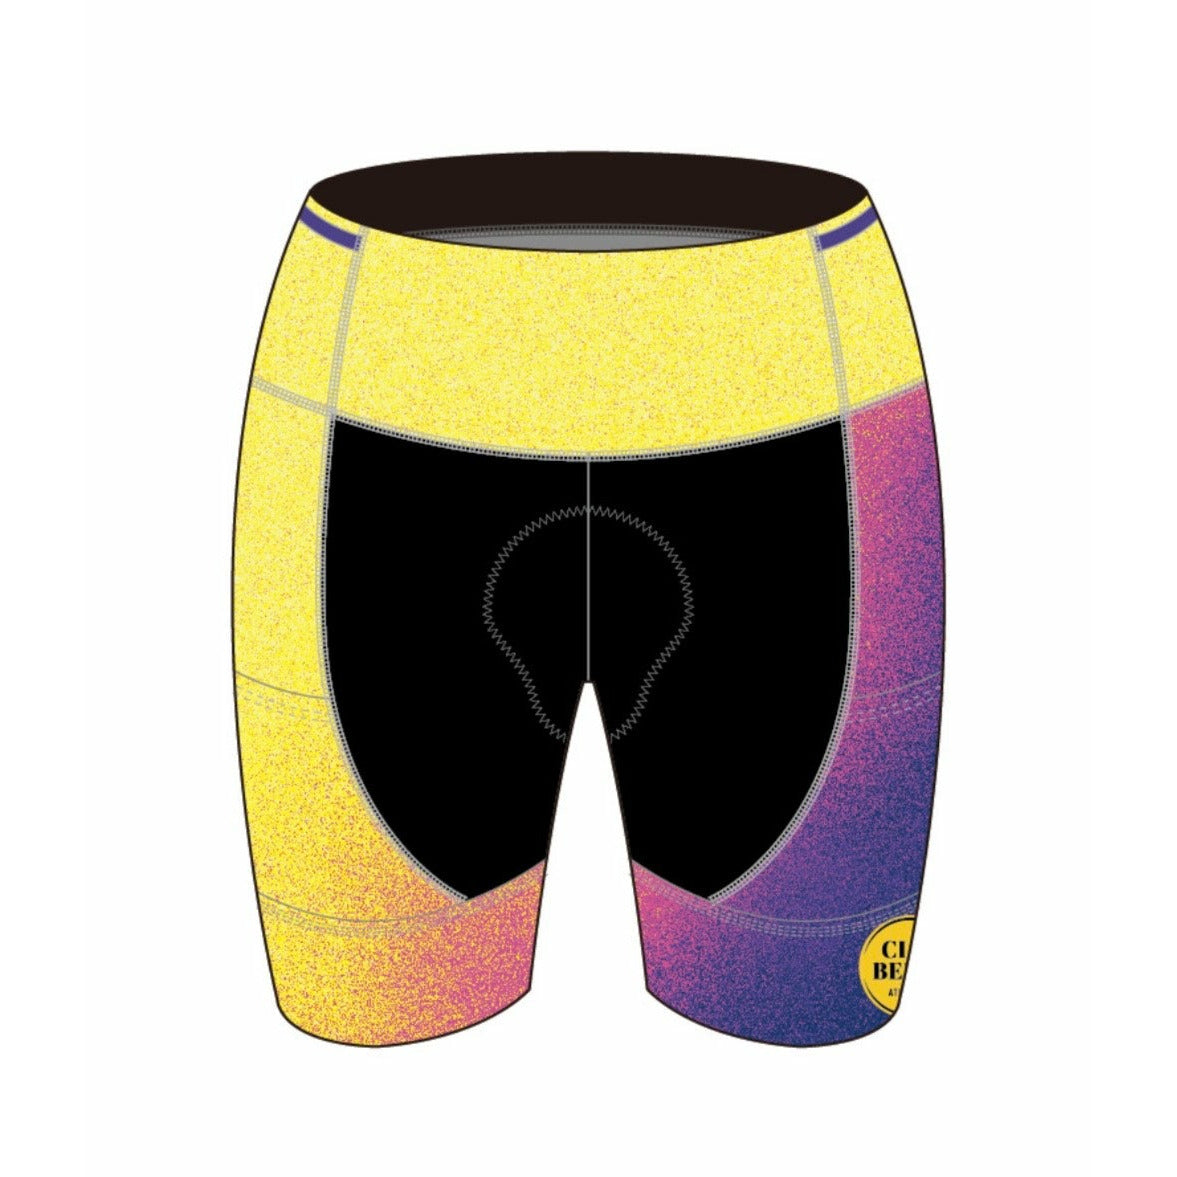 Triathlon Shorts - Chula Vista Design